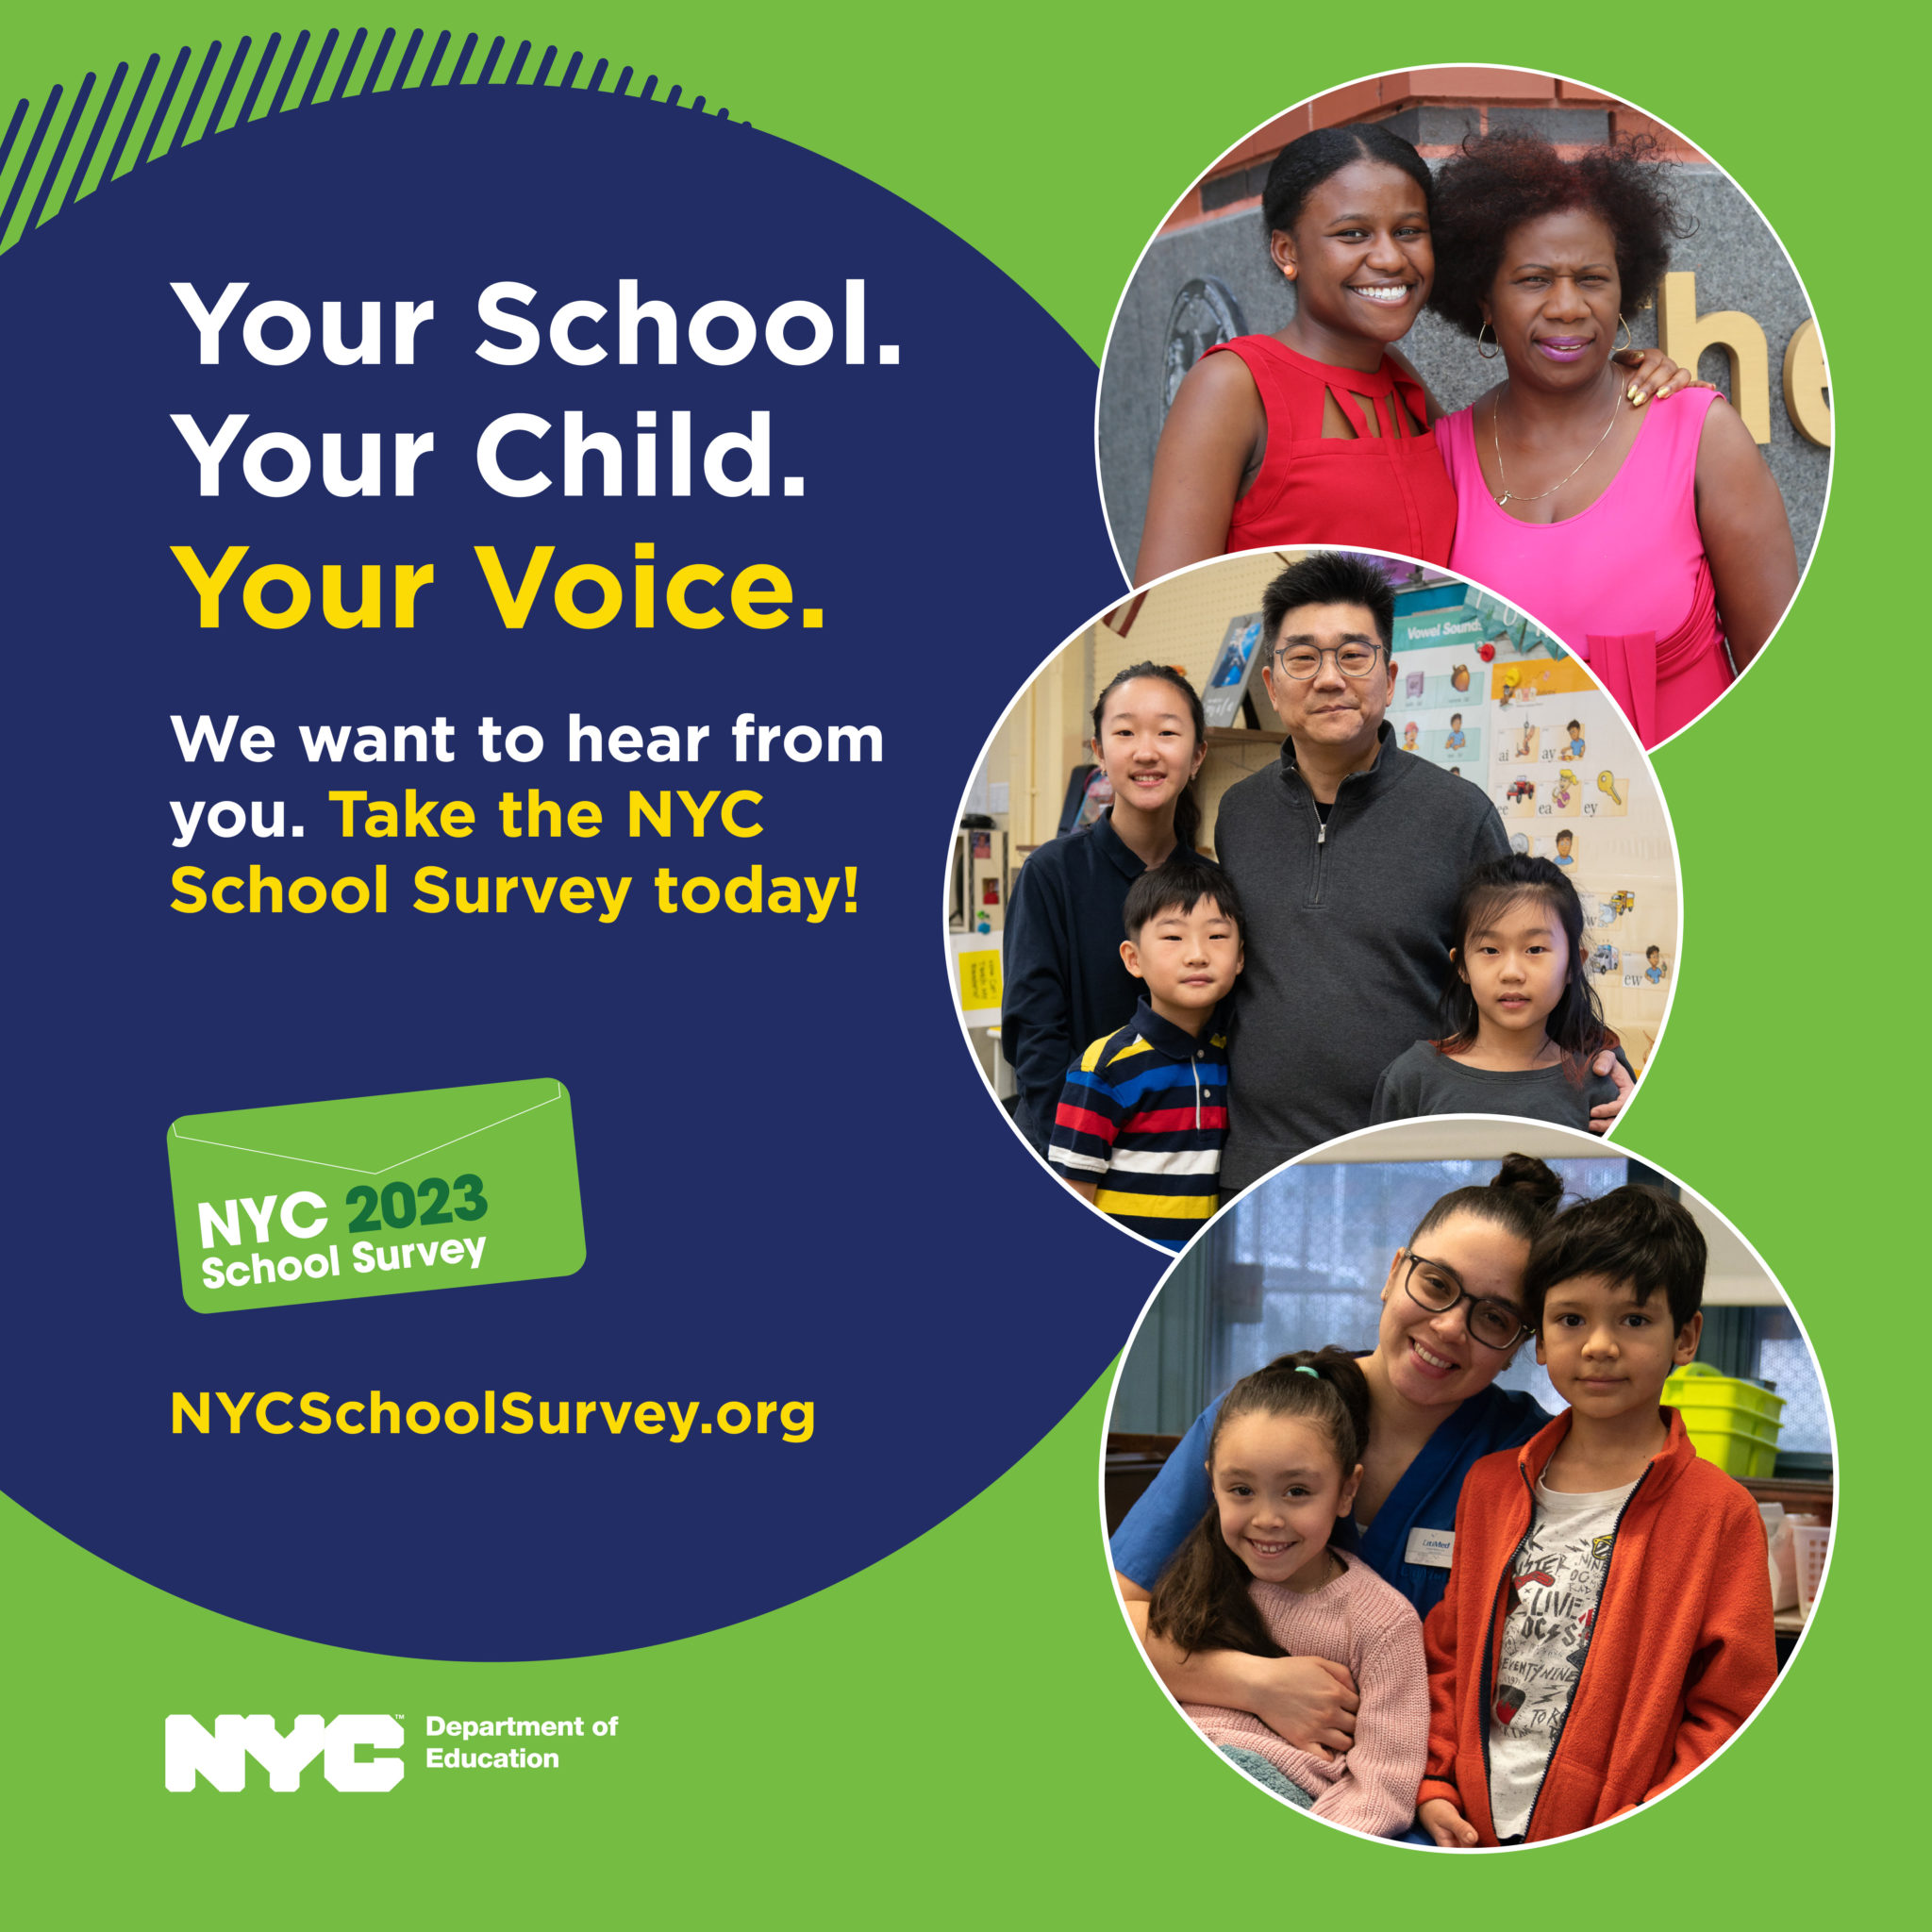 nyc-school-survey-2023-due-march-31st-the-neighborhood-school